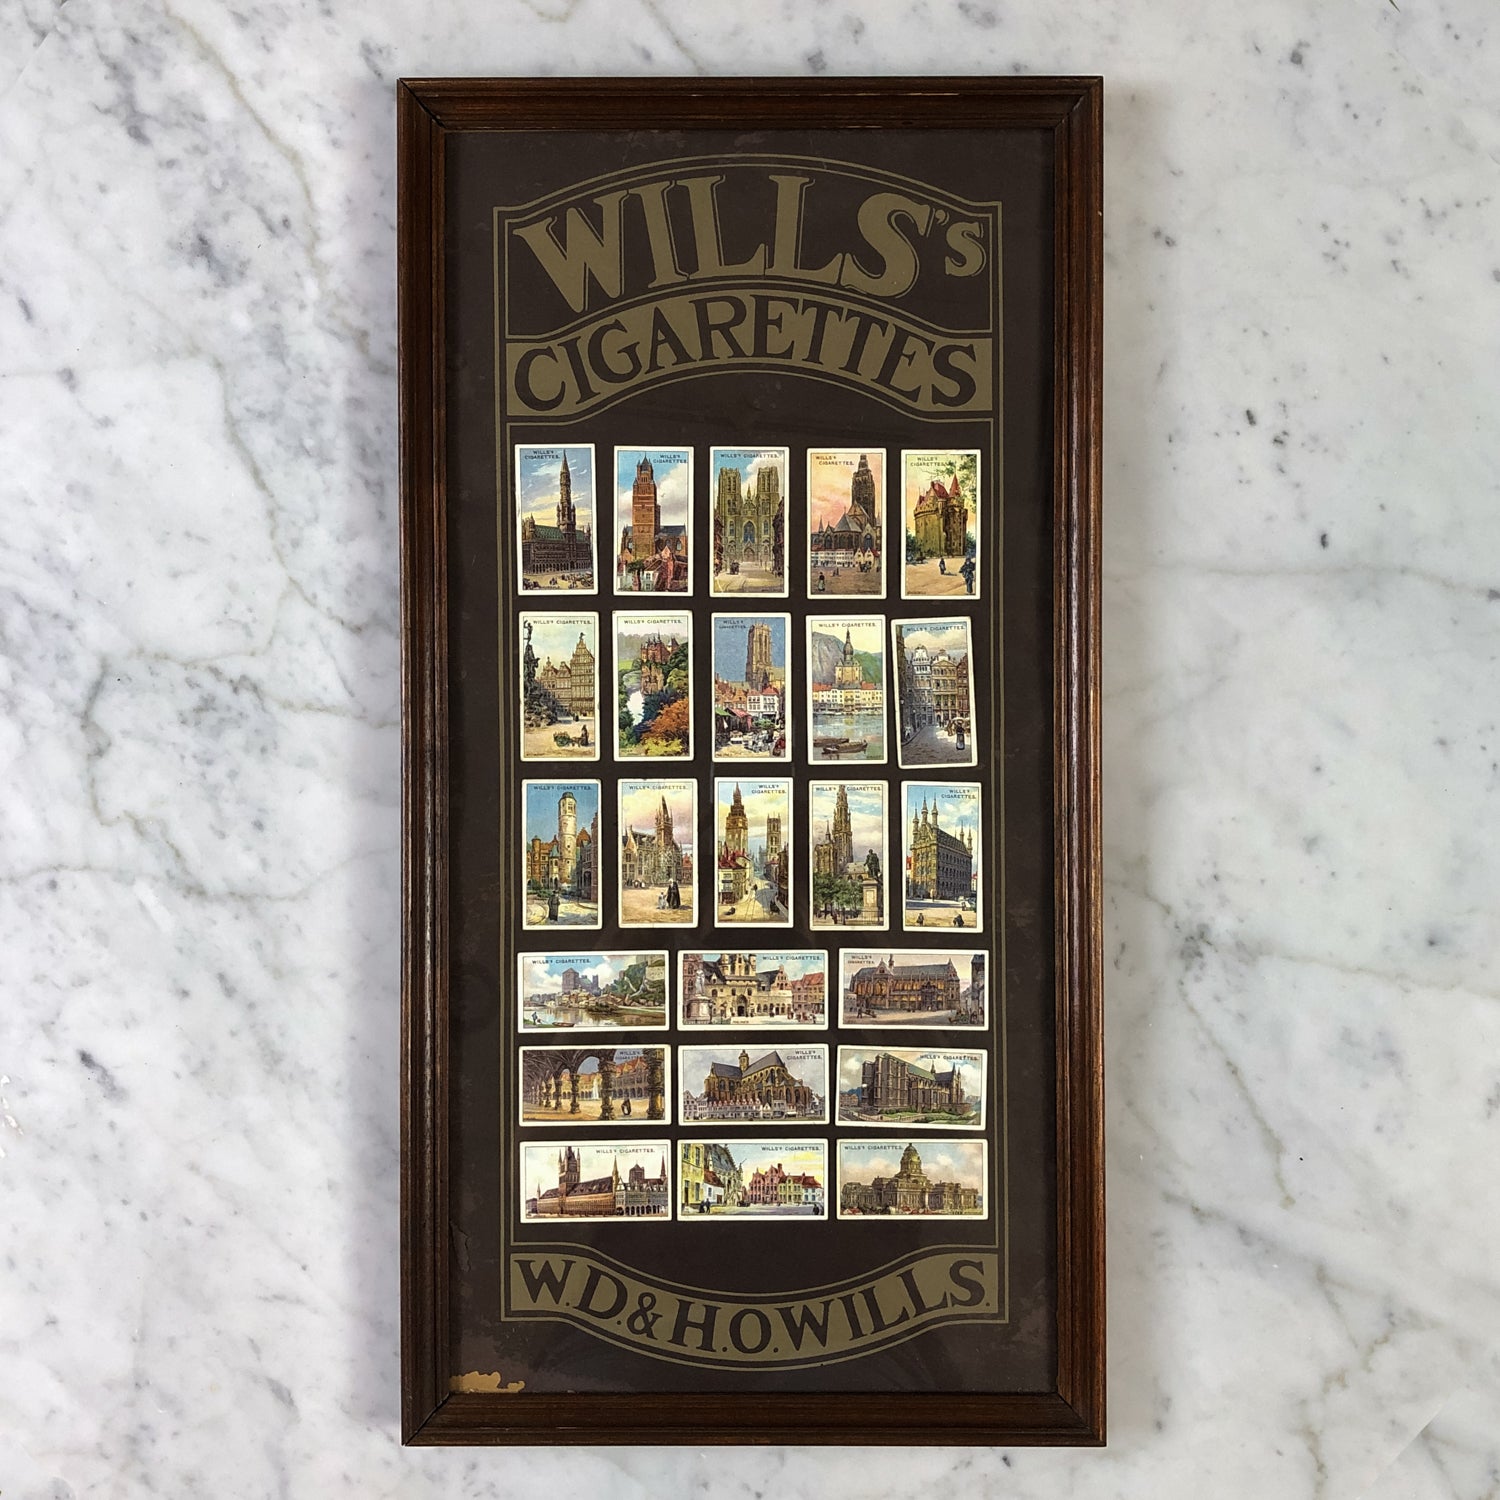 Wills's Cigarettes Framed Art Circa 1900